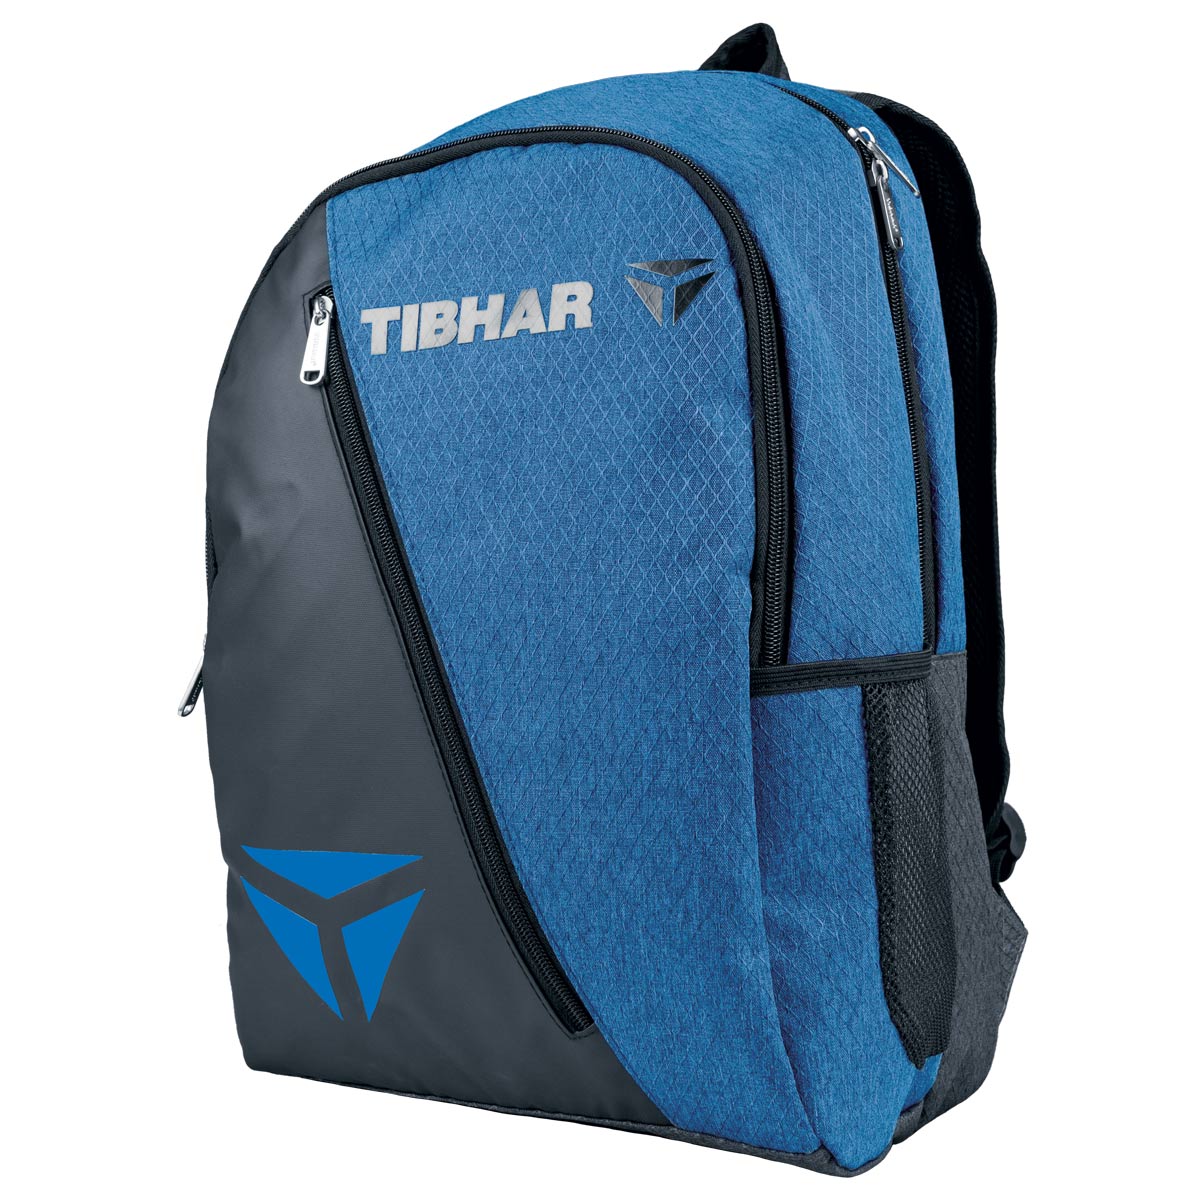 TIBHAR Backpack Manila blue/black